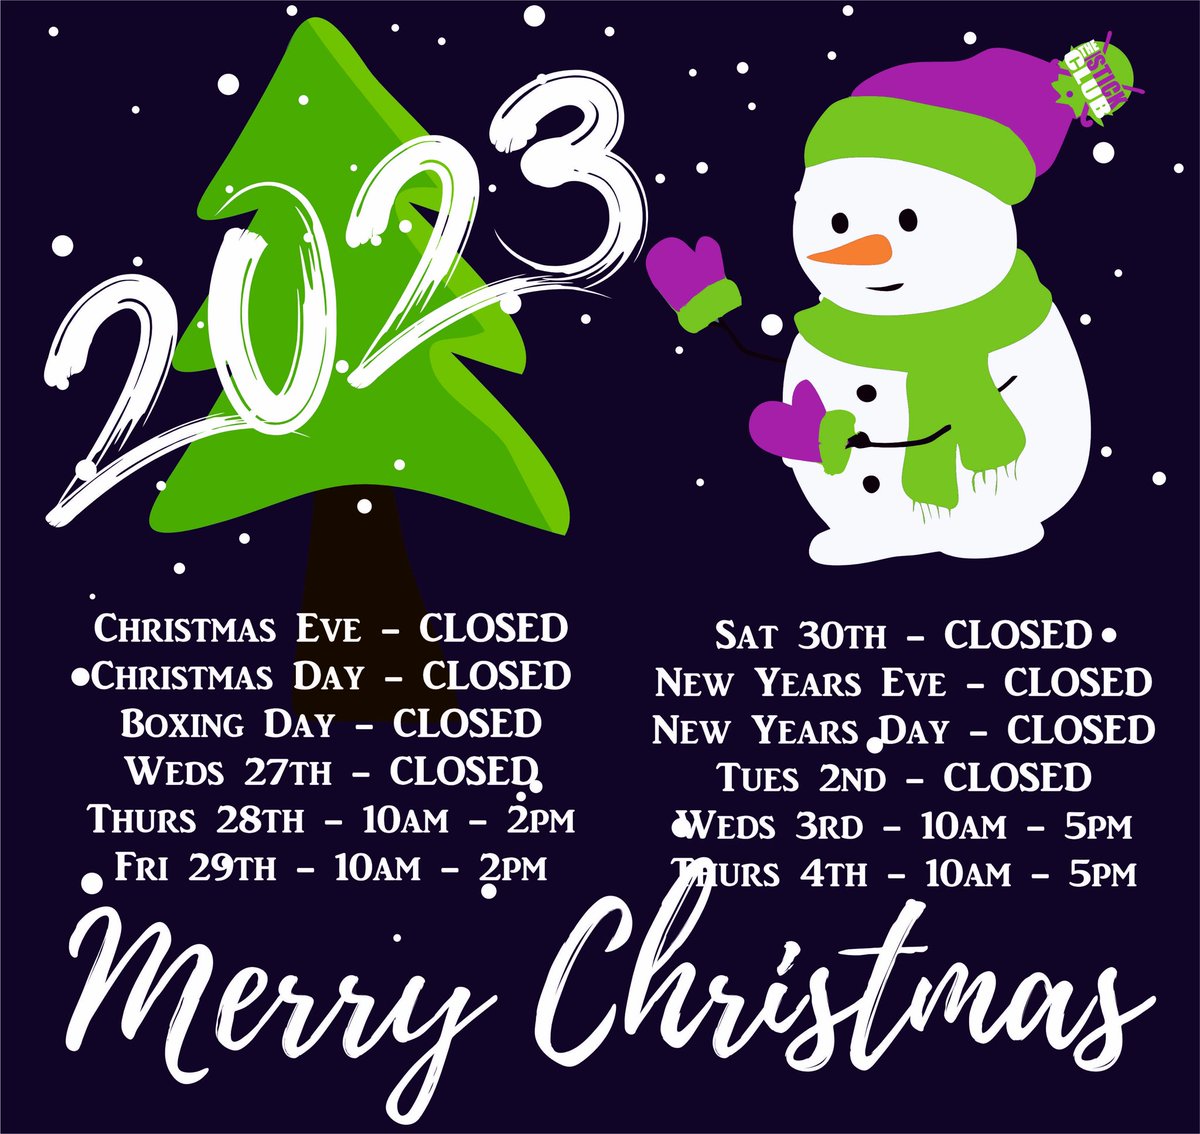 Christmas & New Year Opening Times
#christmasgifts2023 #christmasshopping #OpeningTimes #stockingfillers #hockey